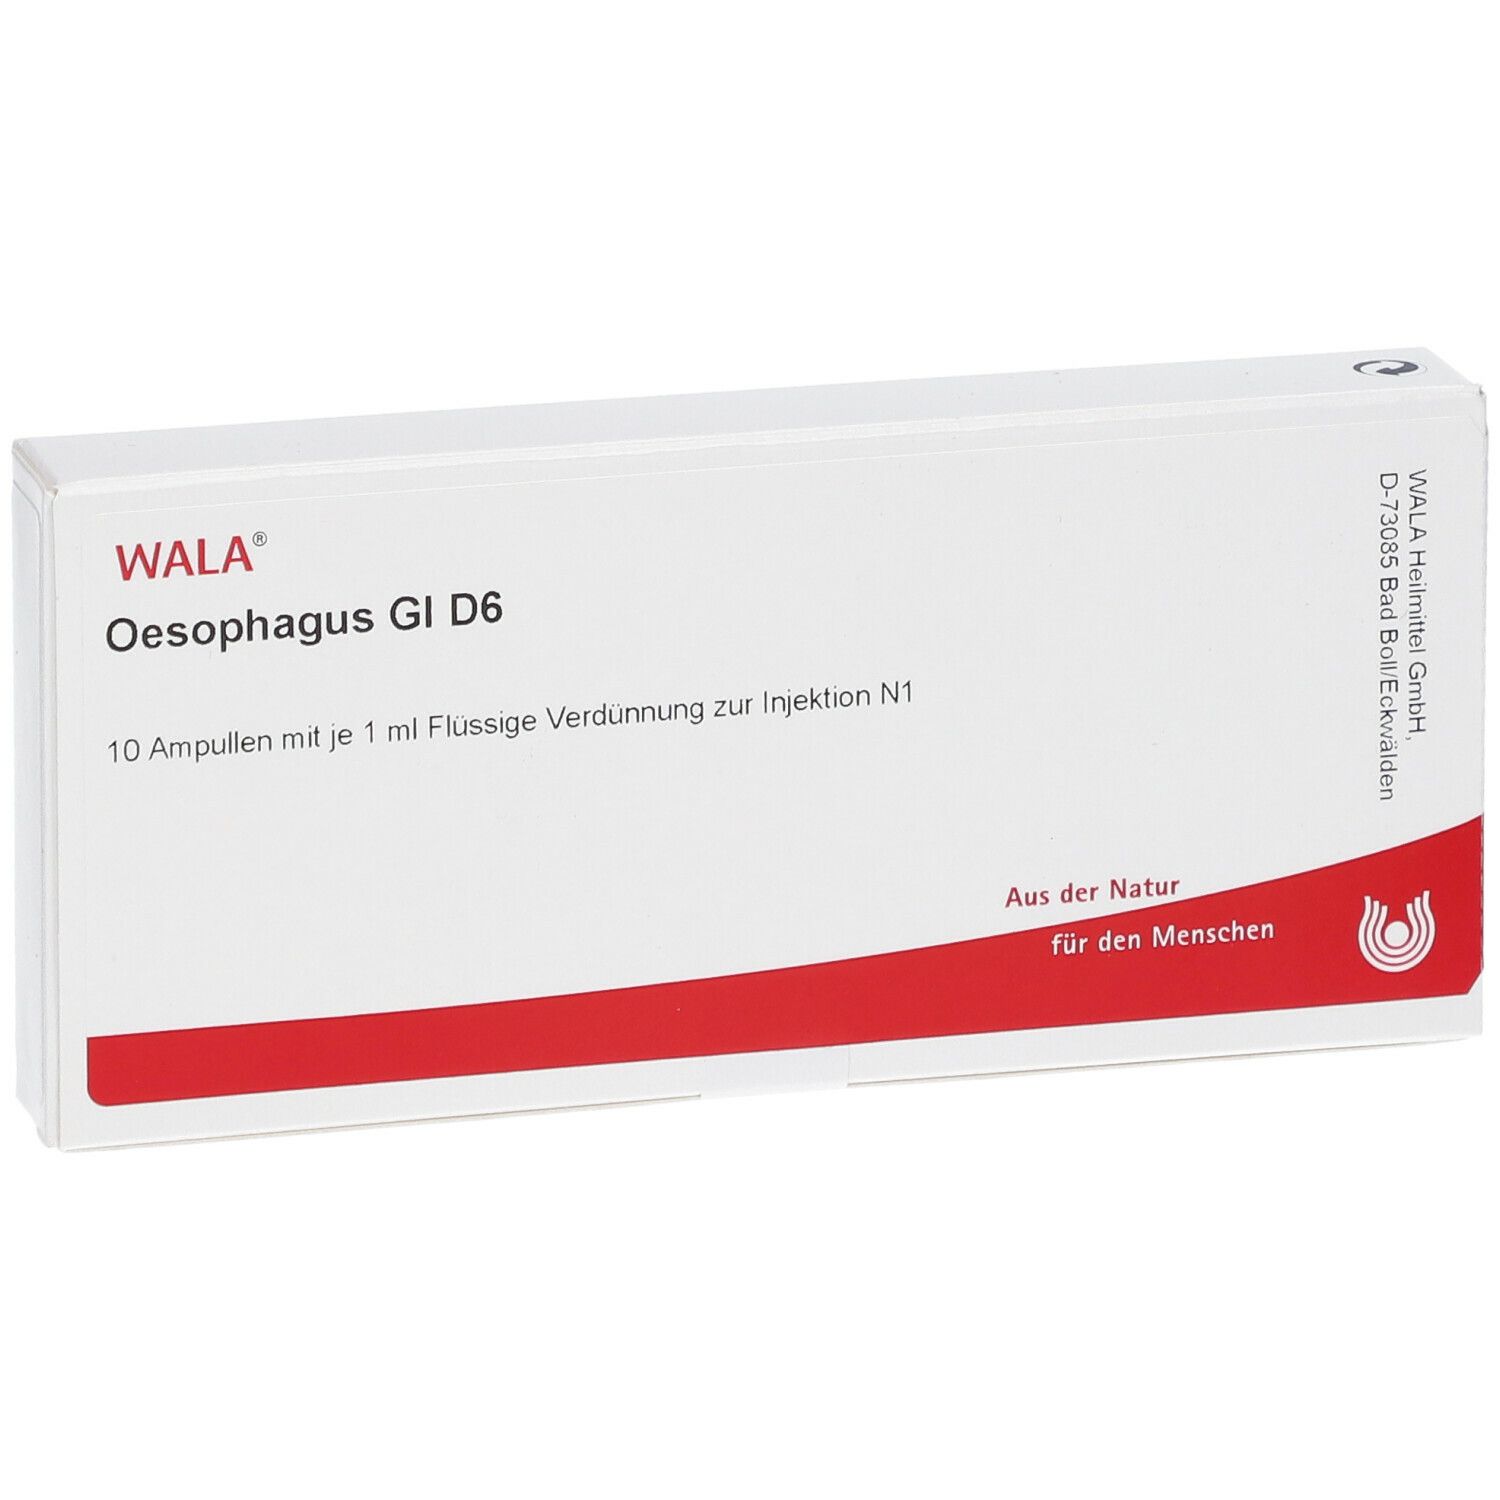 WALA® Oesophagus Gl D 6